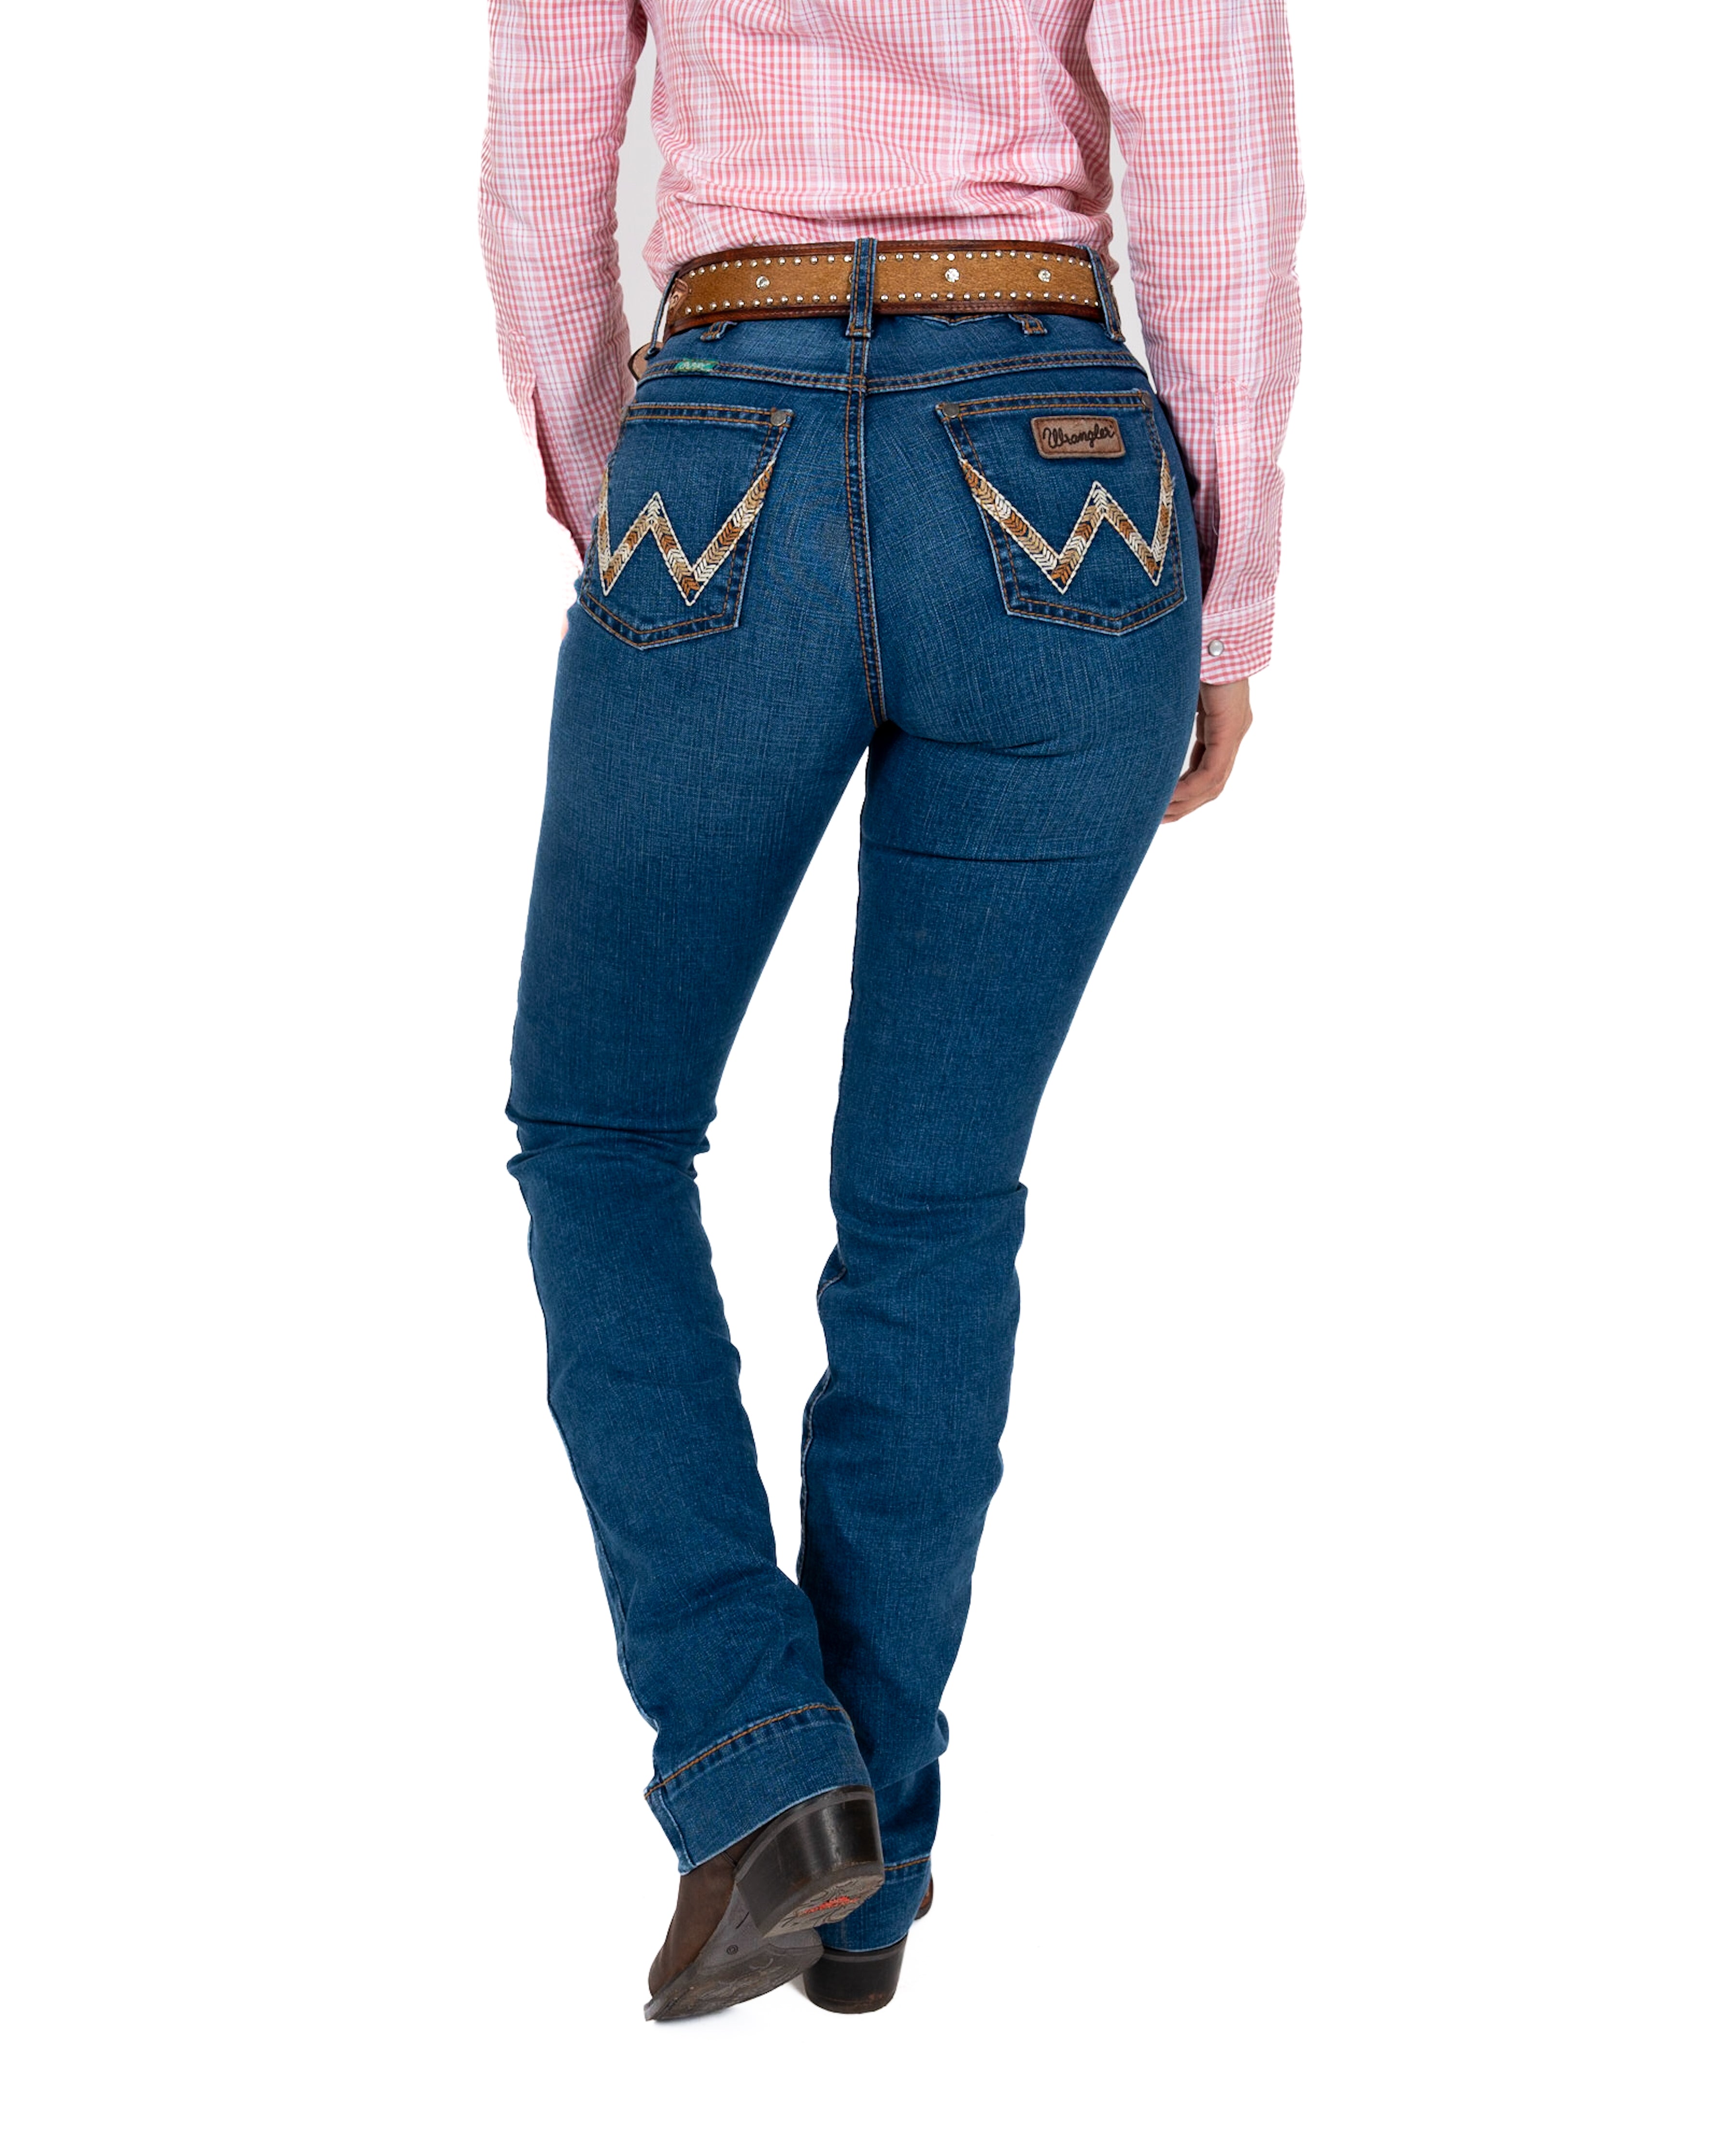 Jeans Wrangler High Rise Cintura Alta Corte Bota Dama